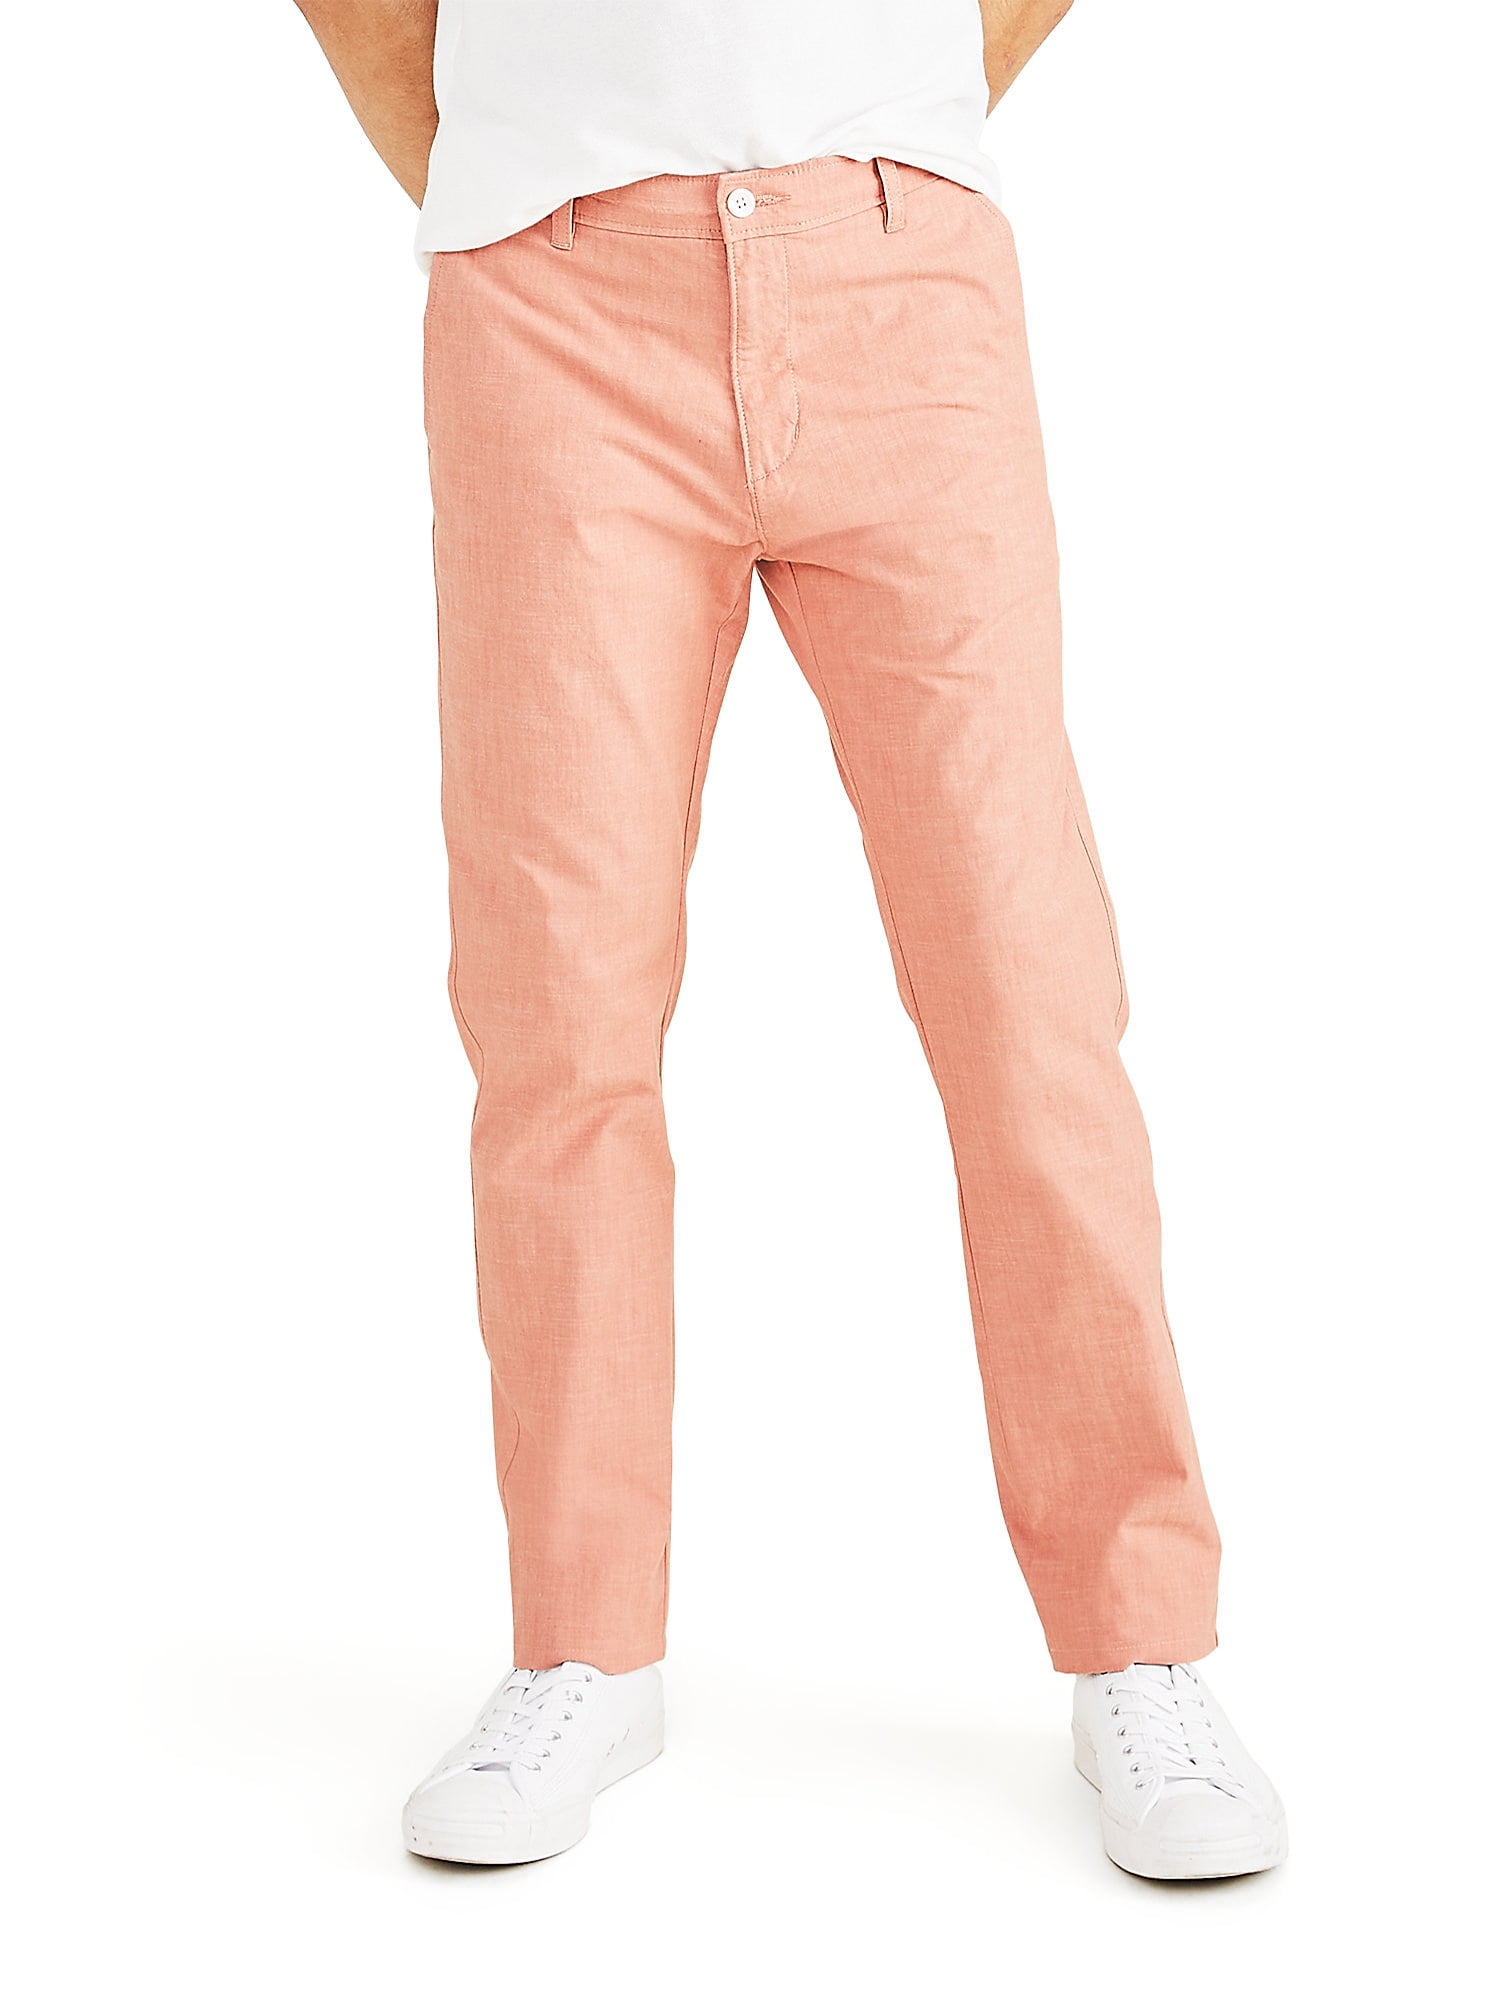 Dockers | Pants | Dockers Premium Pleated Cuffed Gray Wool Blend Mens Dress  Pants 36 X 29 | Poshmark